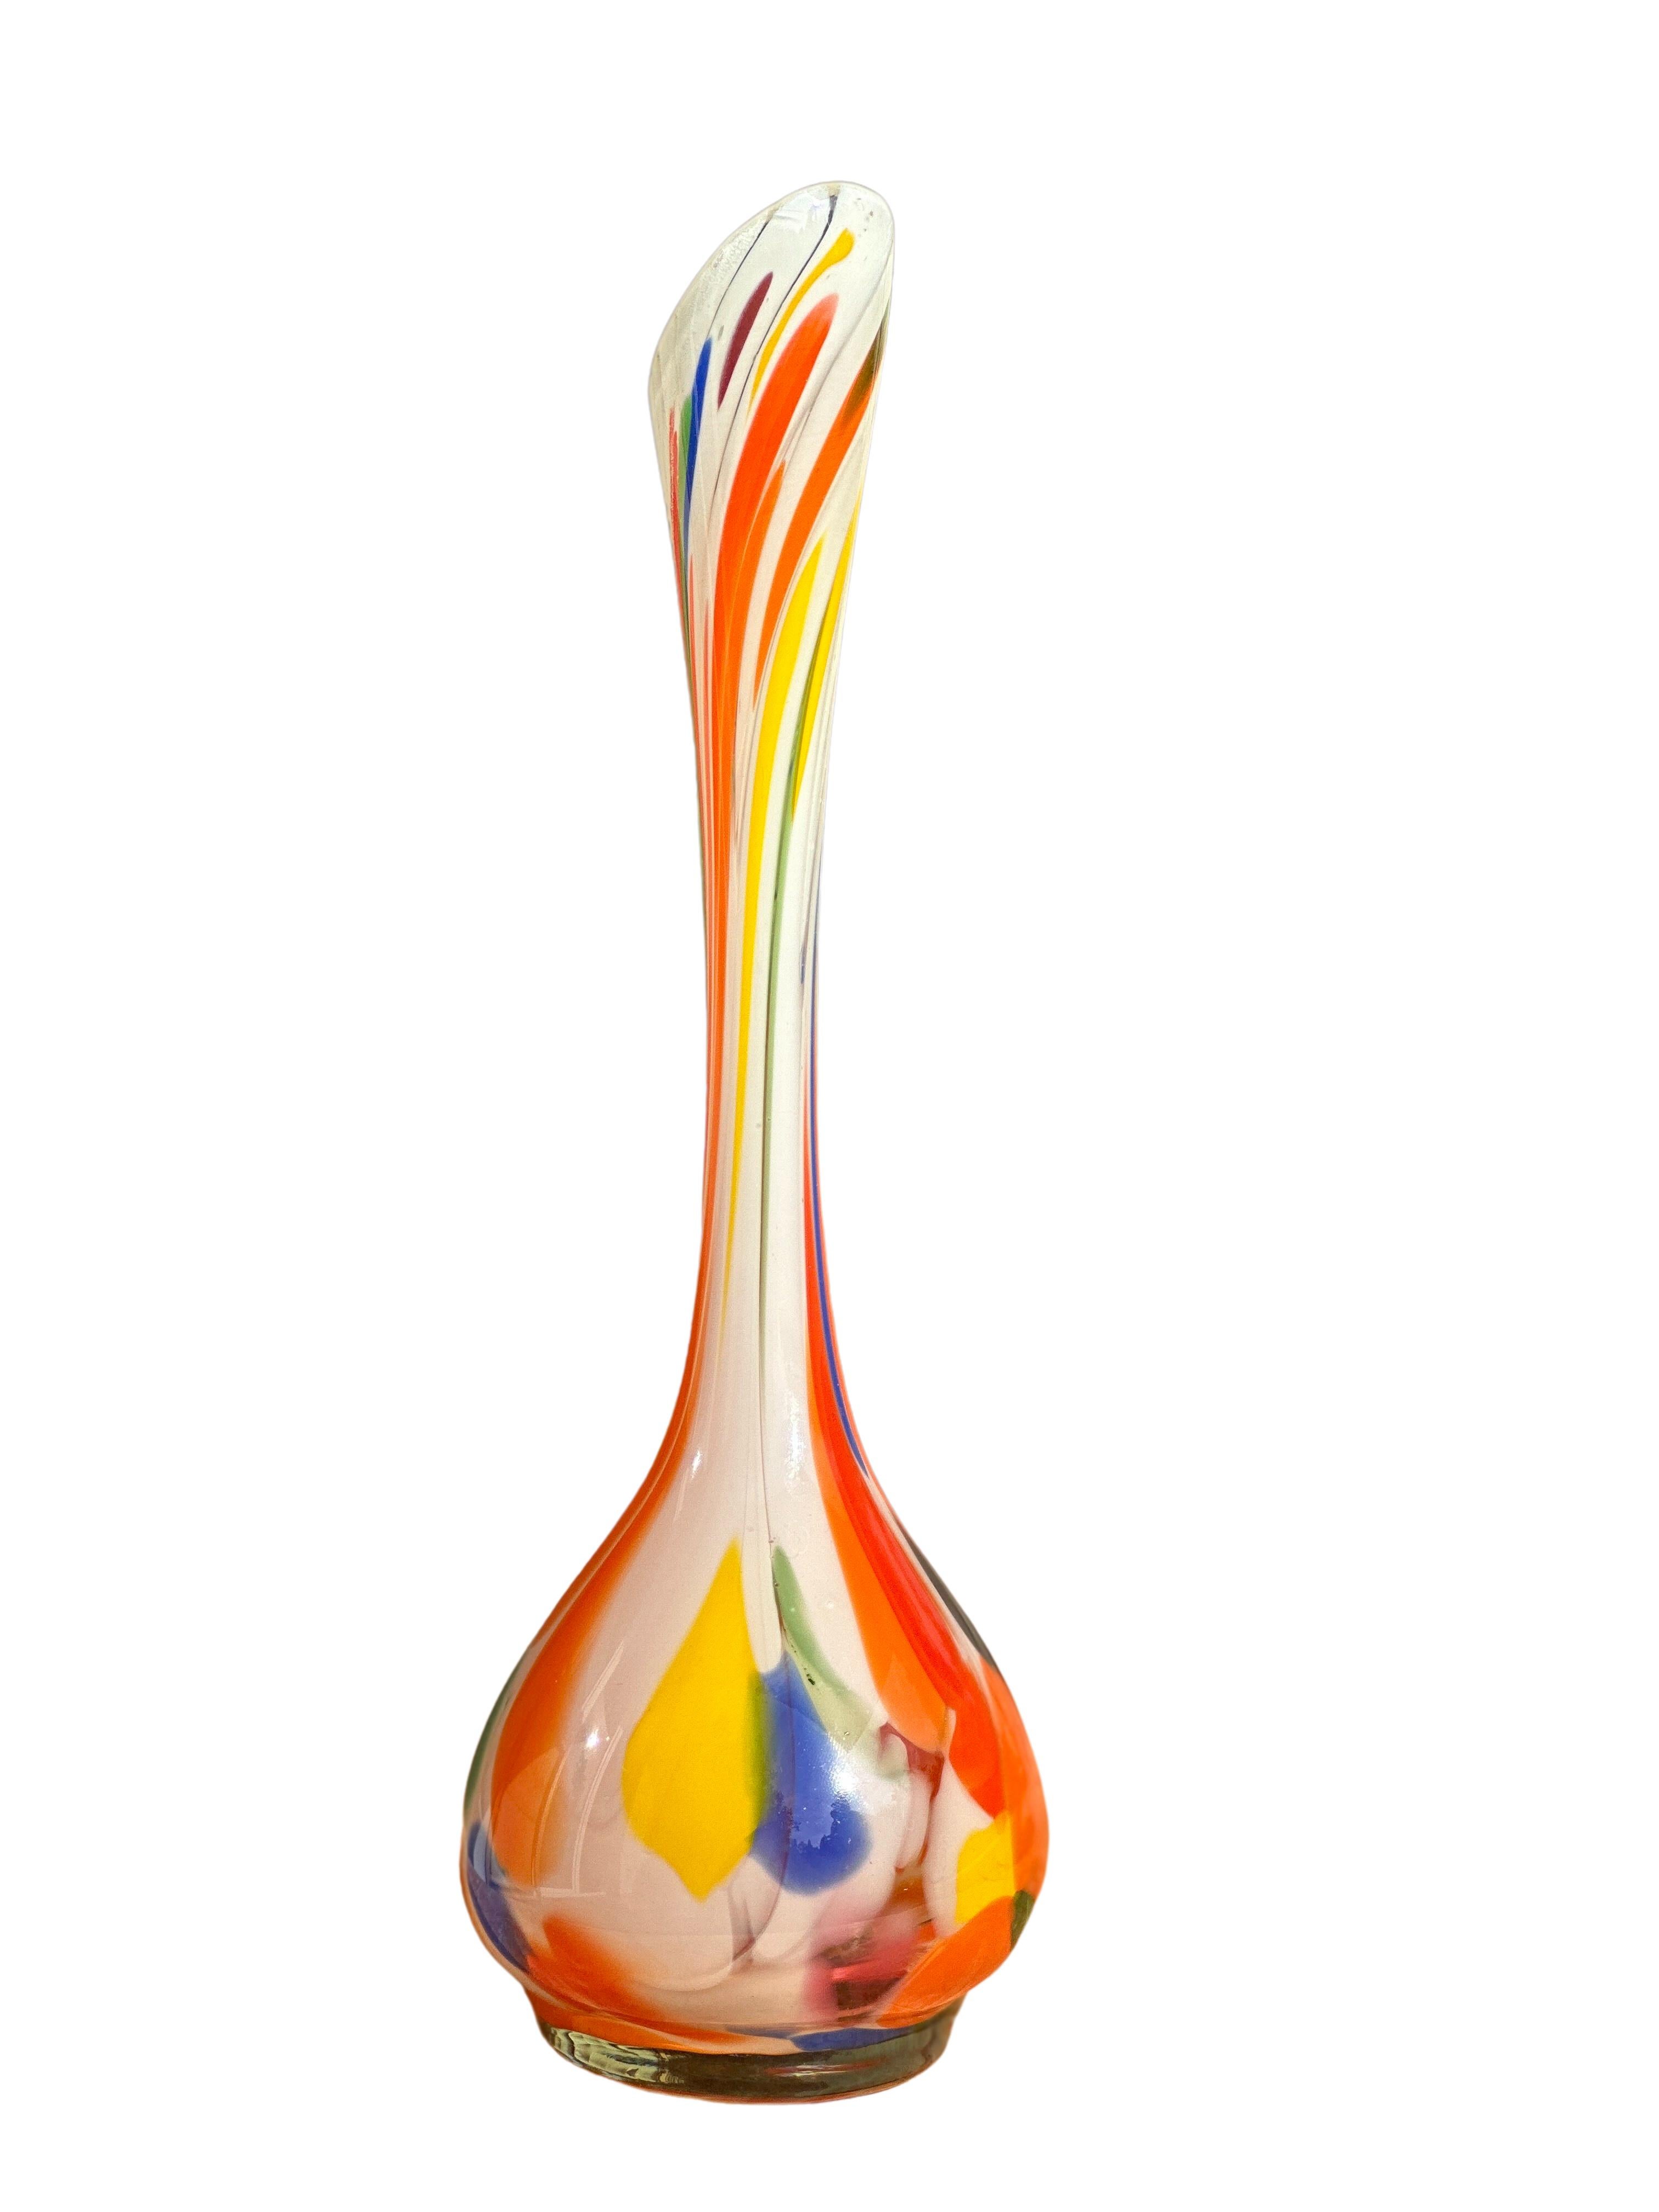 Polish Midcentury Glass Colorful Vase, Poland, 1970s For Sale